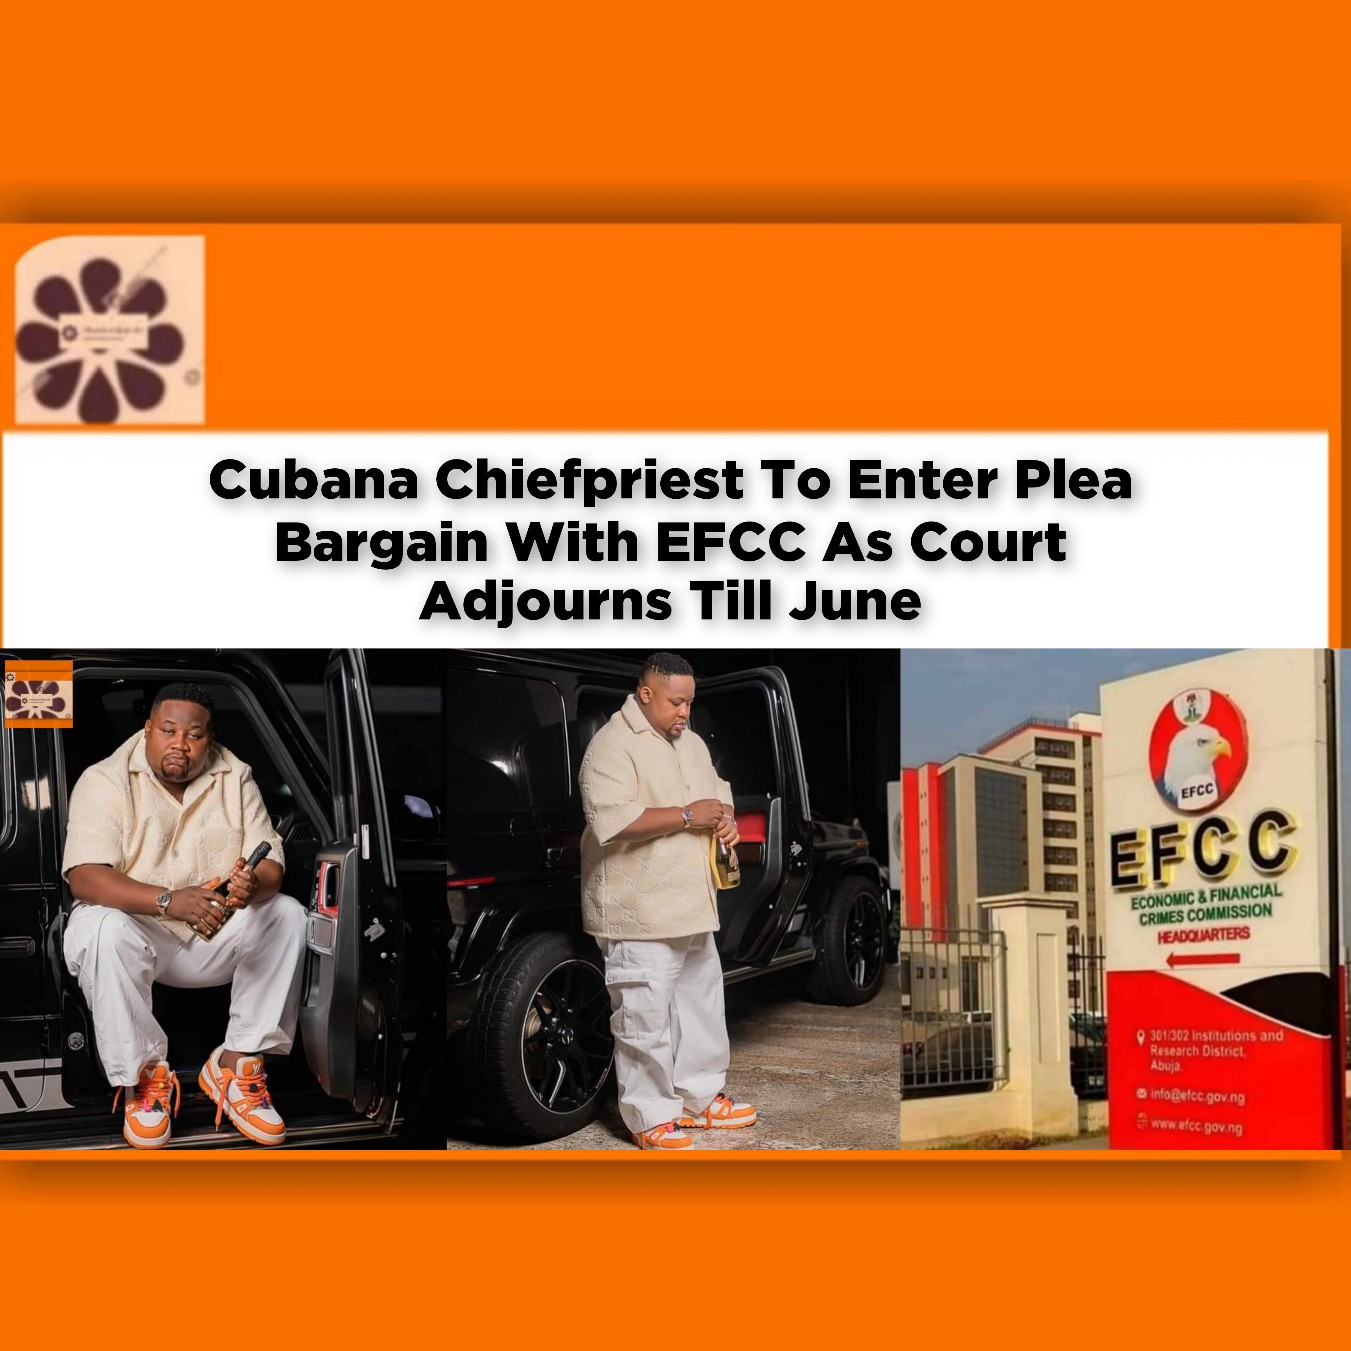 Cubana Chiefpriest To Enter Plea Bargain With EFCC As Court Adjourns Till June ~ OsazuwaAkonedo #Yoruba